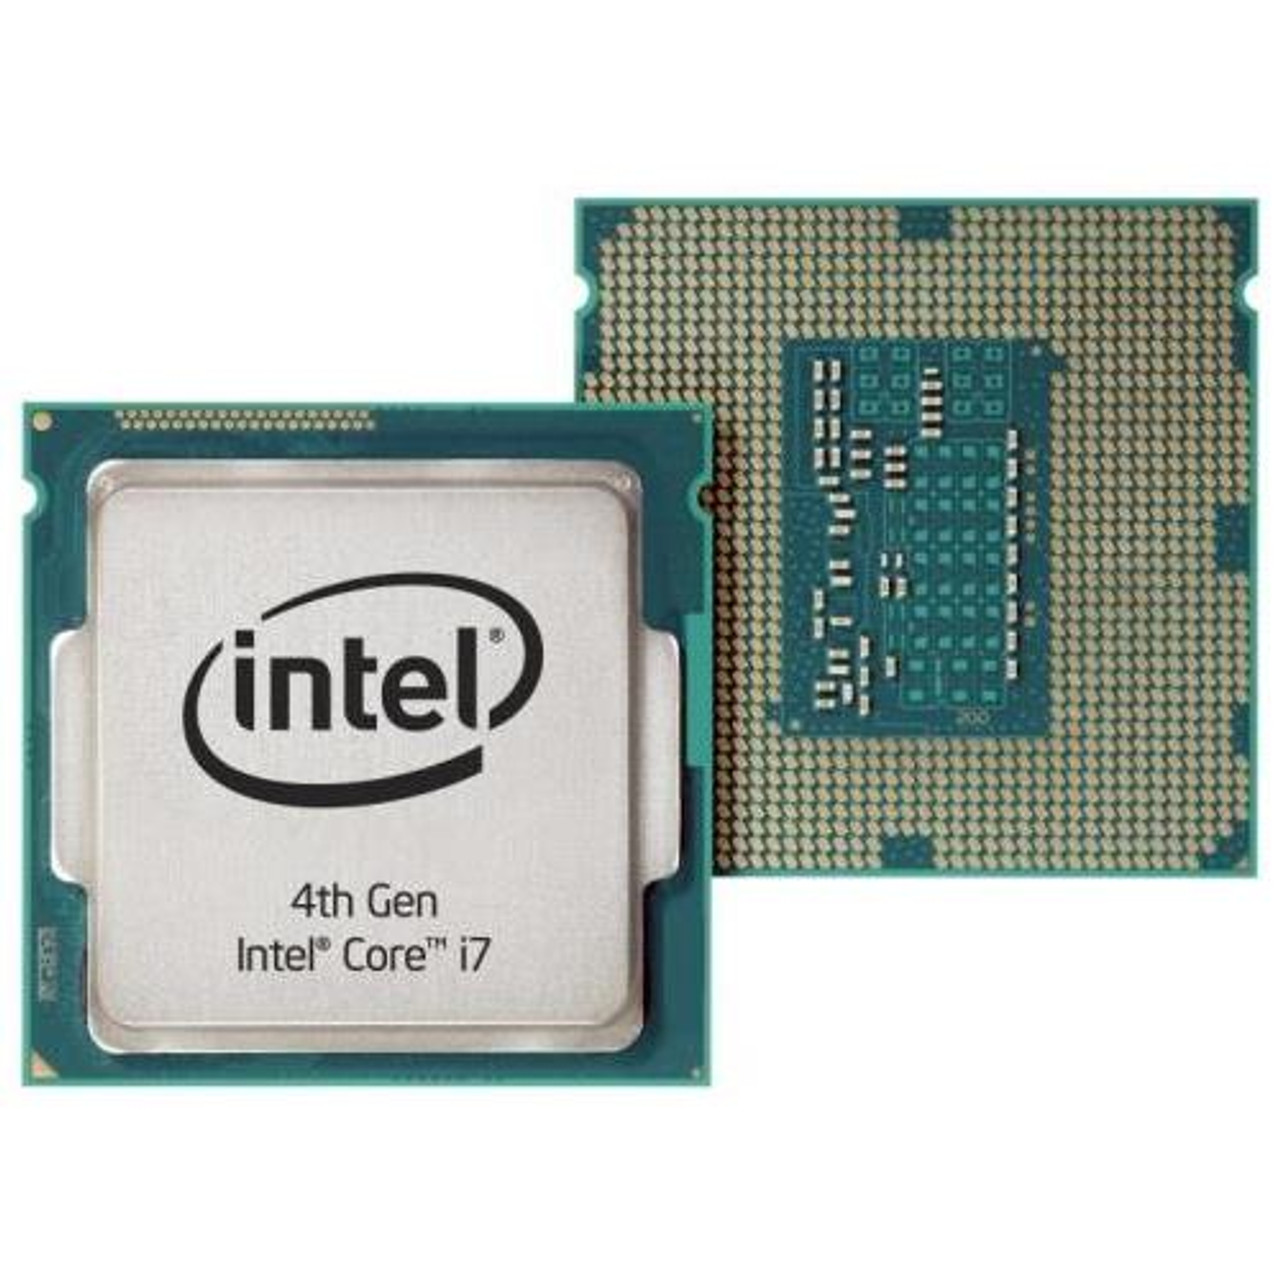 Atlas Nægte sekundær i7-4700MQ Intel Core i7 Desktop 2.40 GHz Processor Unboxed OEM